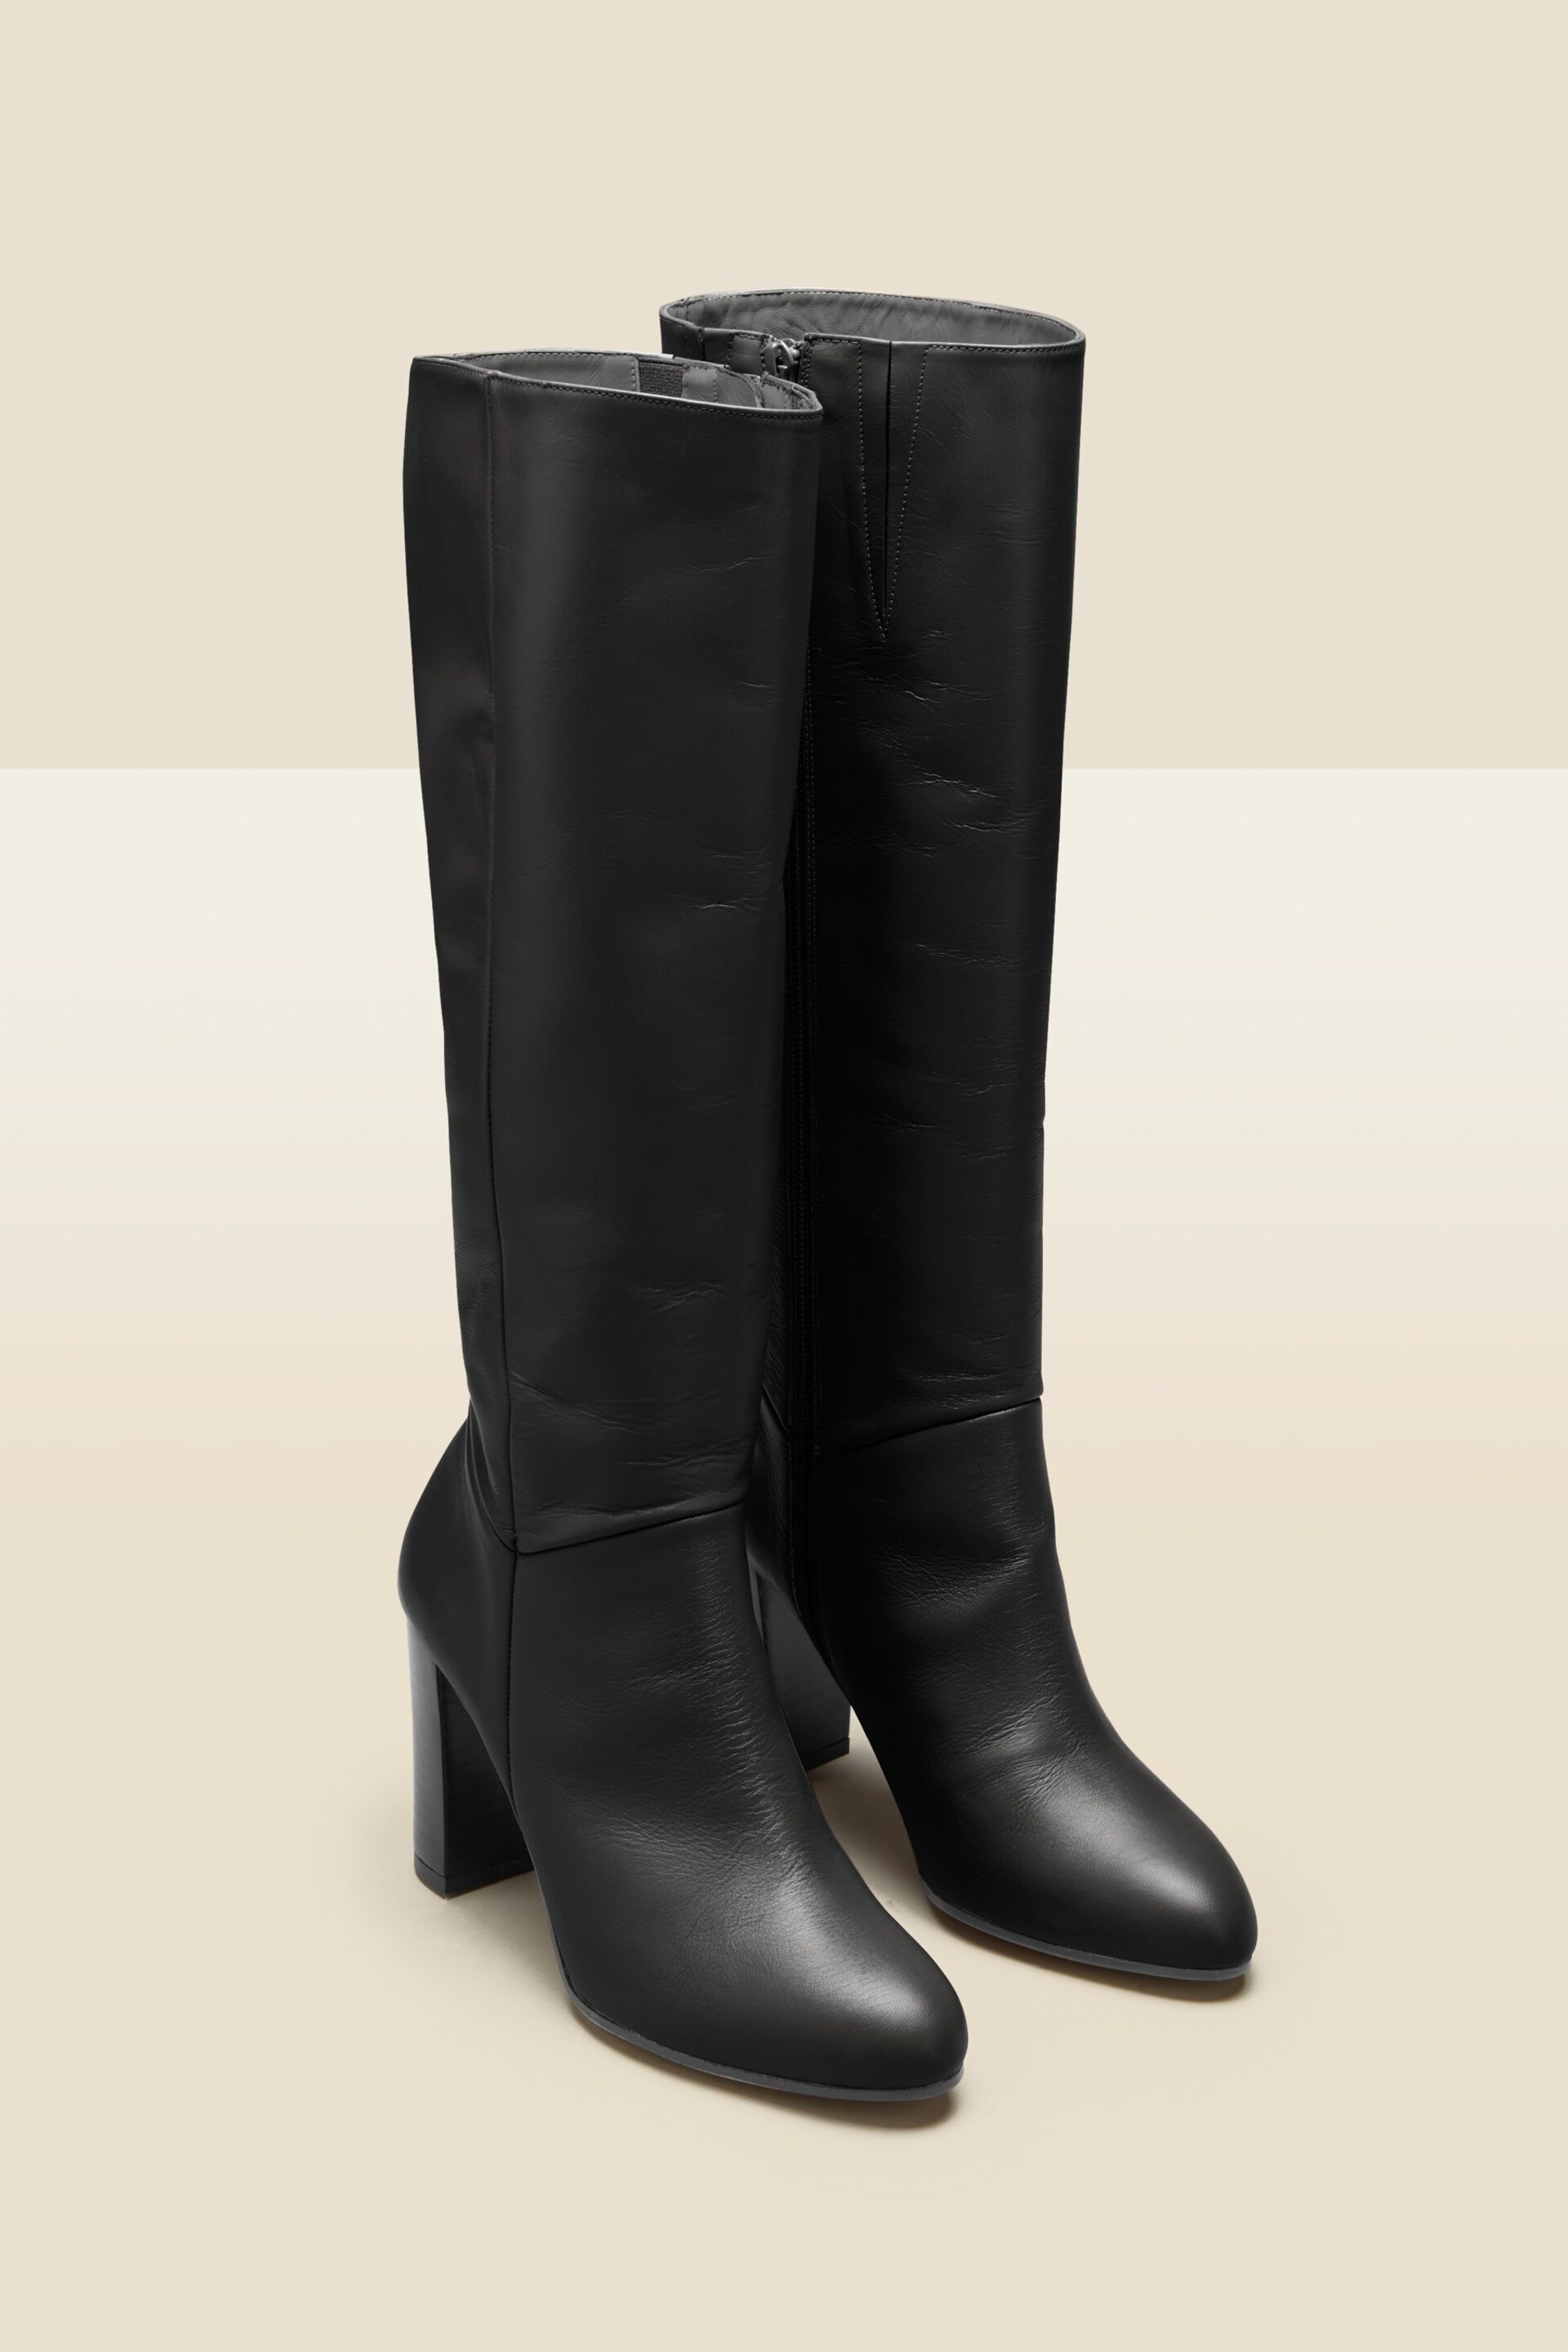 Sosandar Black Leather Zip Knee High Boots - Image 2 of 2